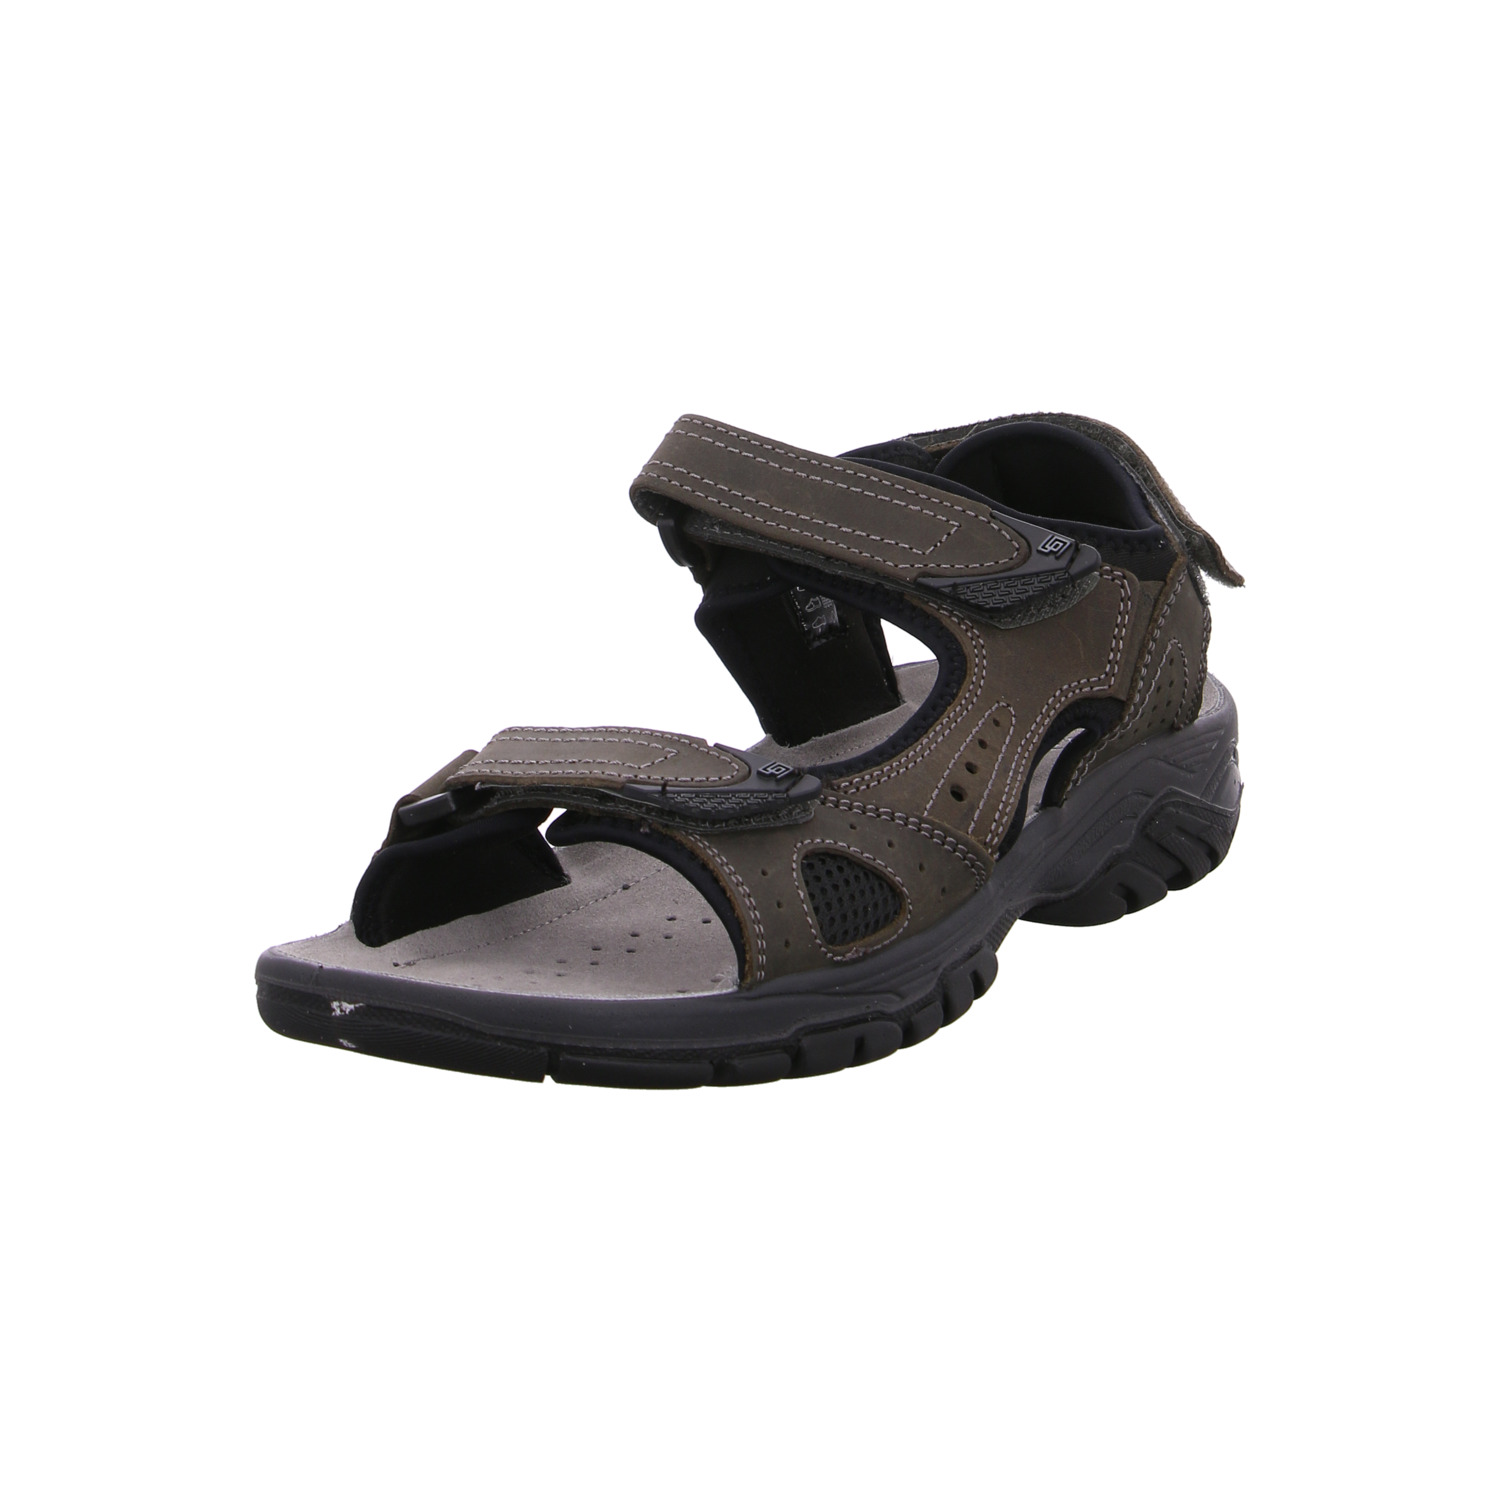 orion-sandaletten-schwarz-118985-40